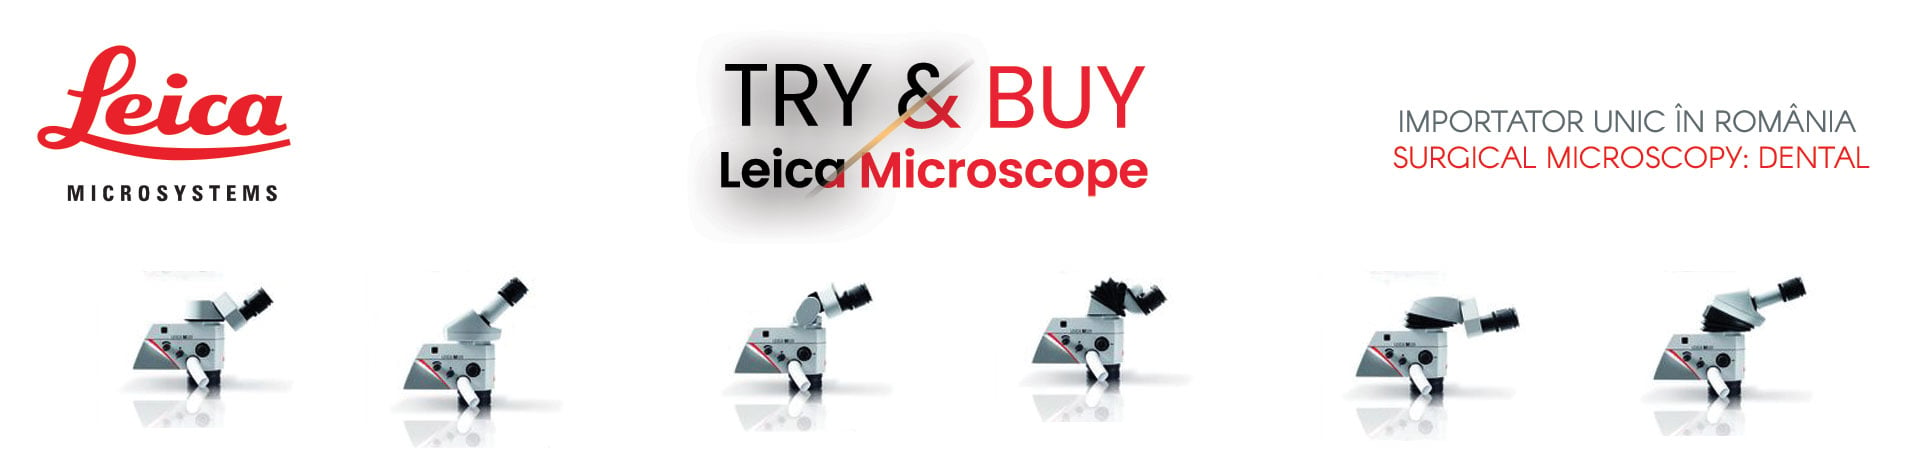 Try&Buy: Microscoape dentare Leica